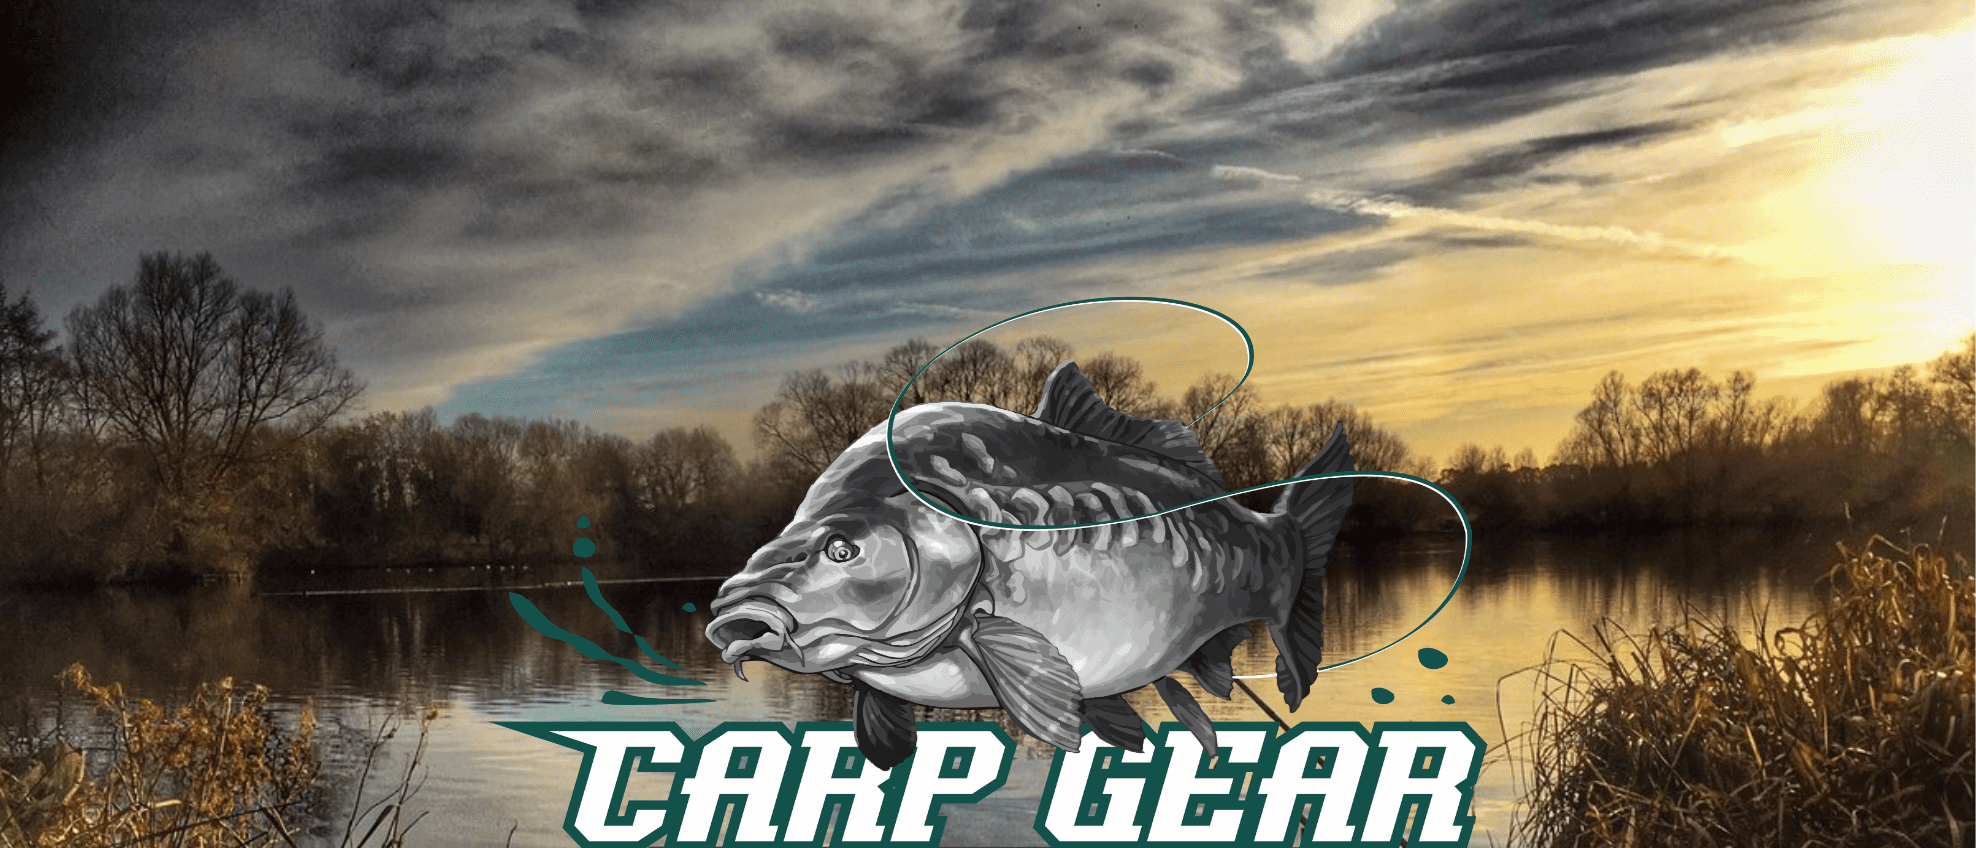 Carp fishing bait and fishing gear on Amazon.com